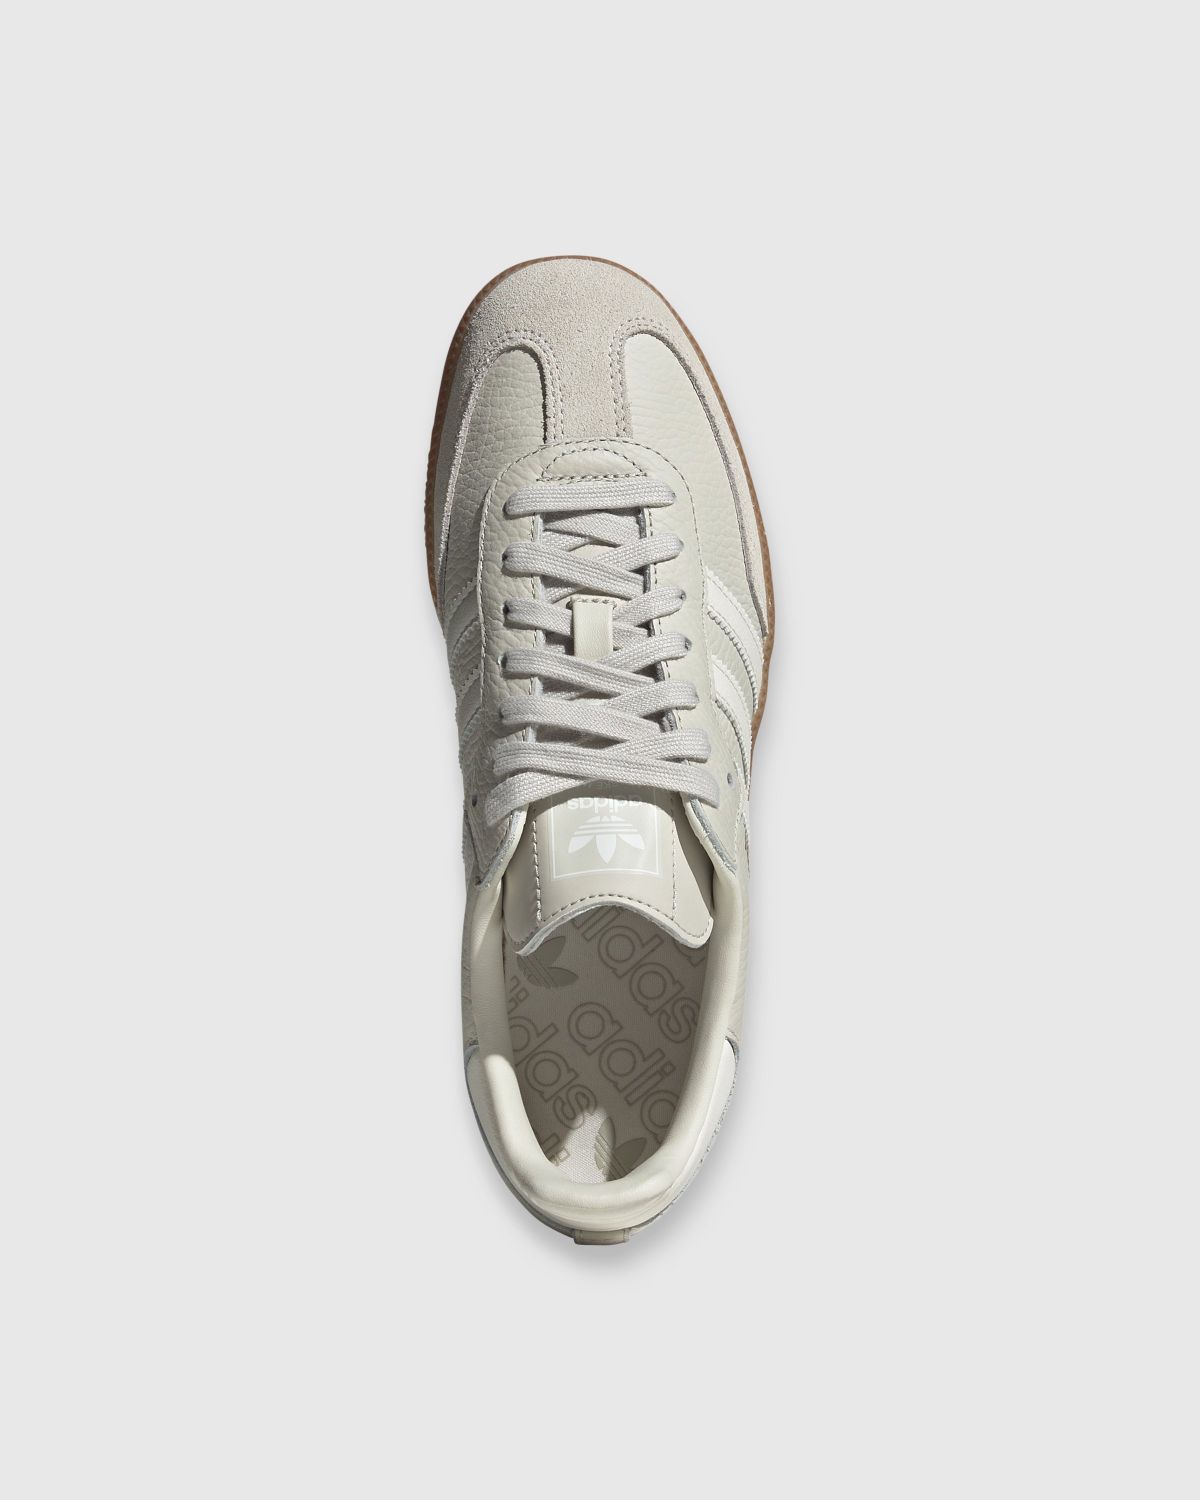 Adidas – Samba OG White/Aluminium - Sneakers - White - Image 5